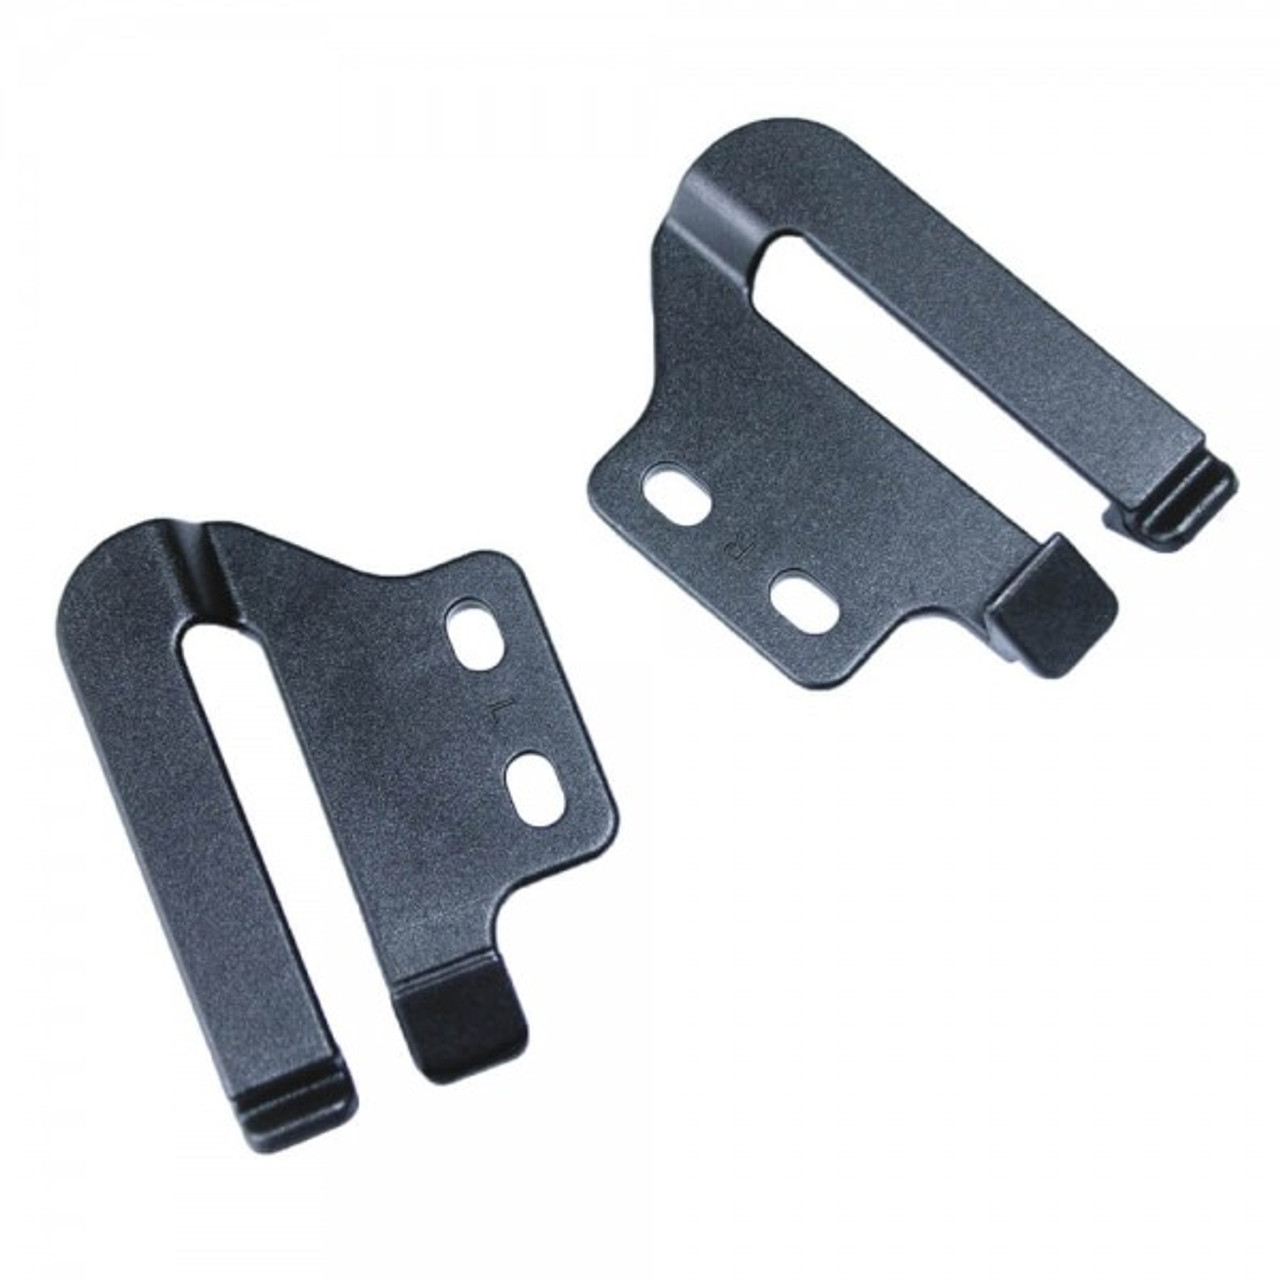 Belt Clips - SpeedEase - (fits 1.75 inch belts) - Black - (1 Pair)